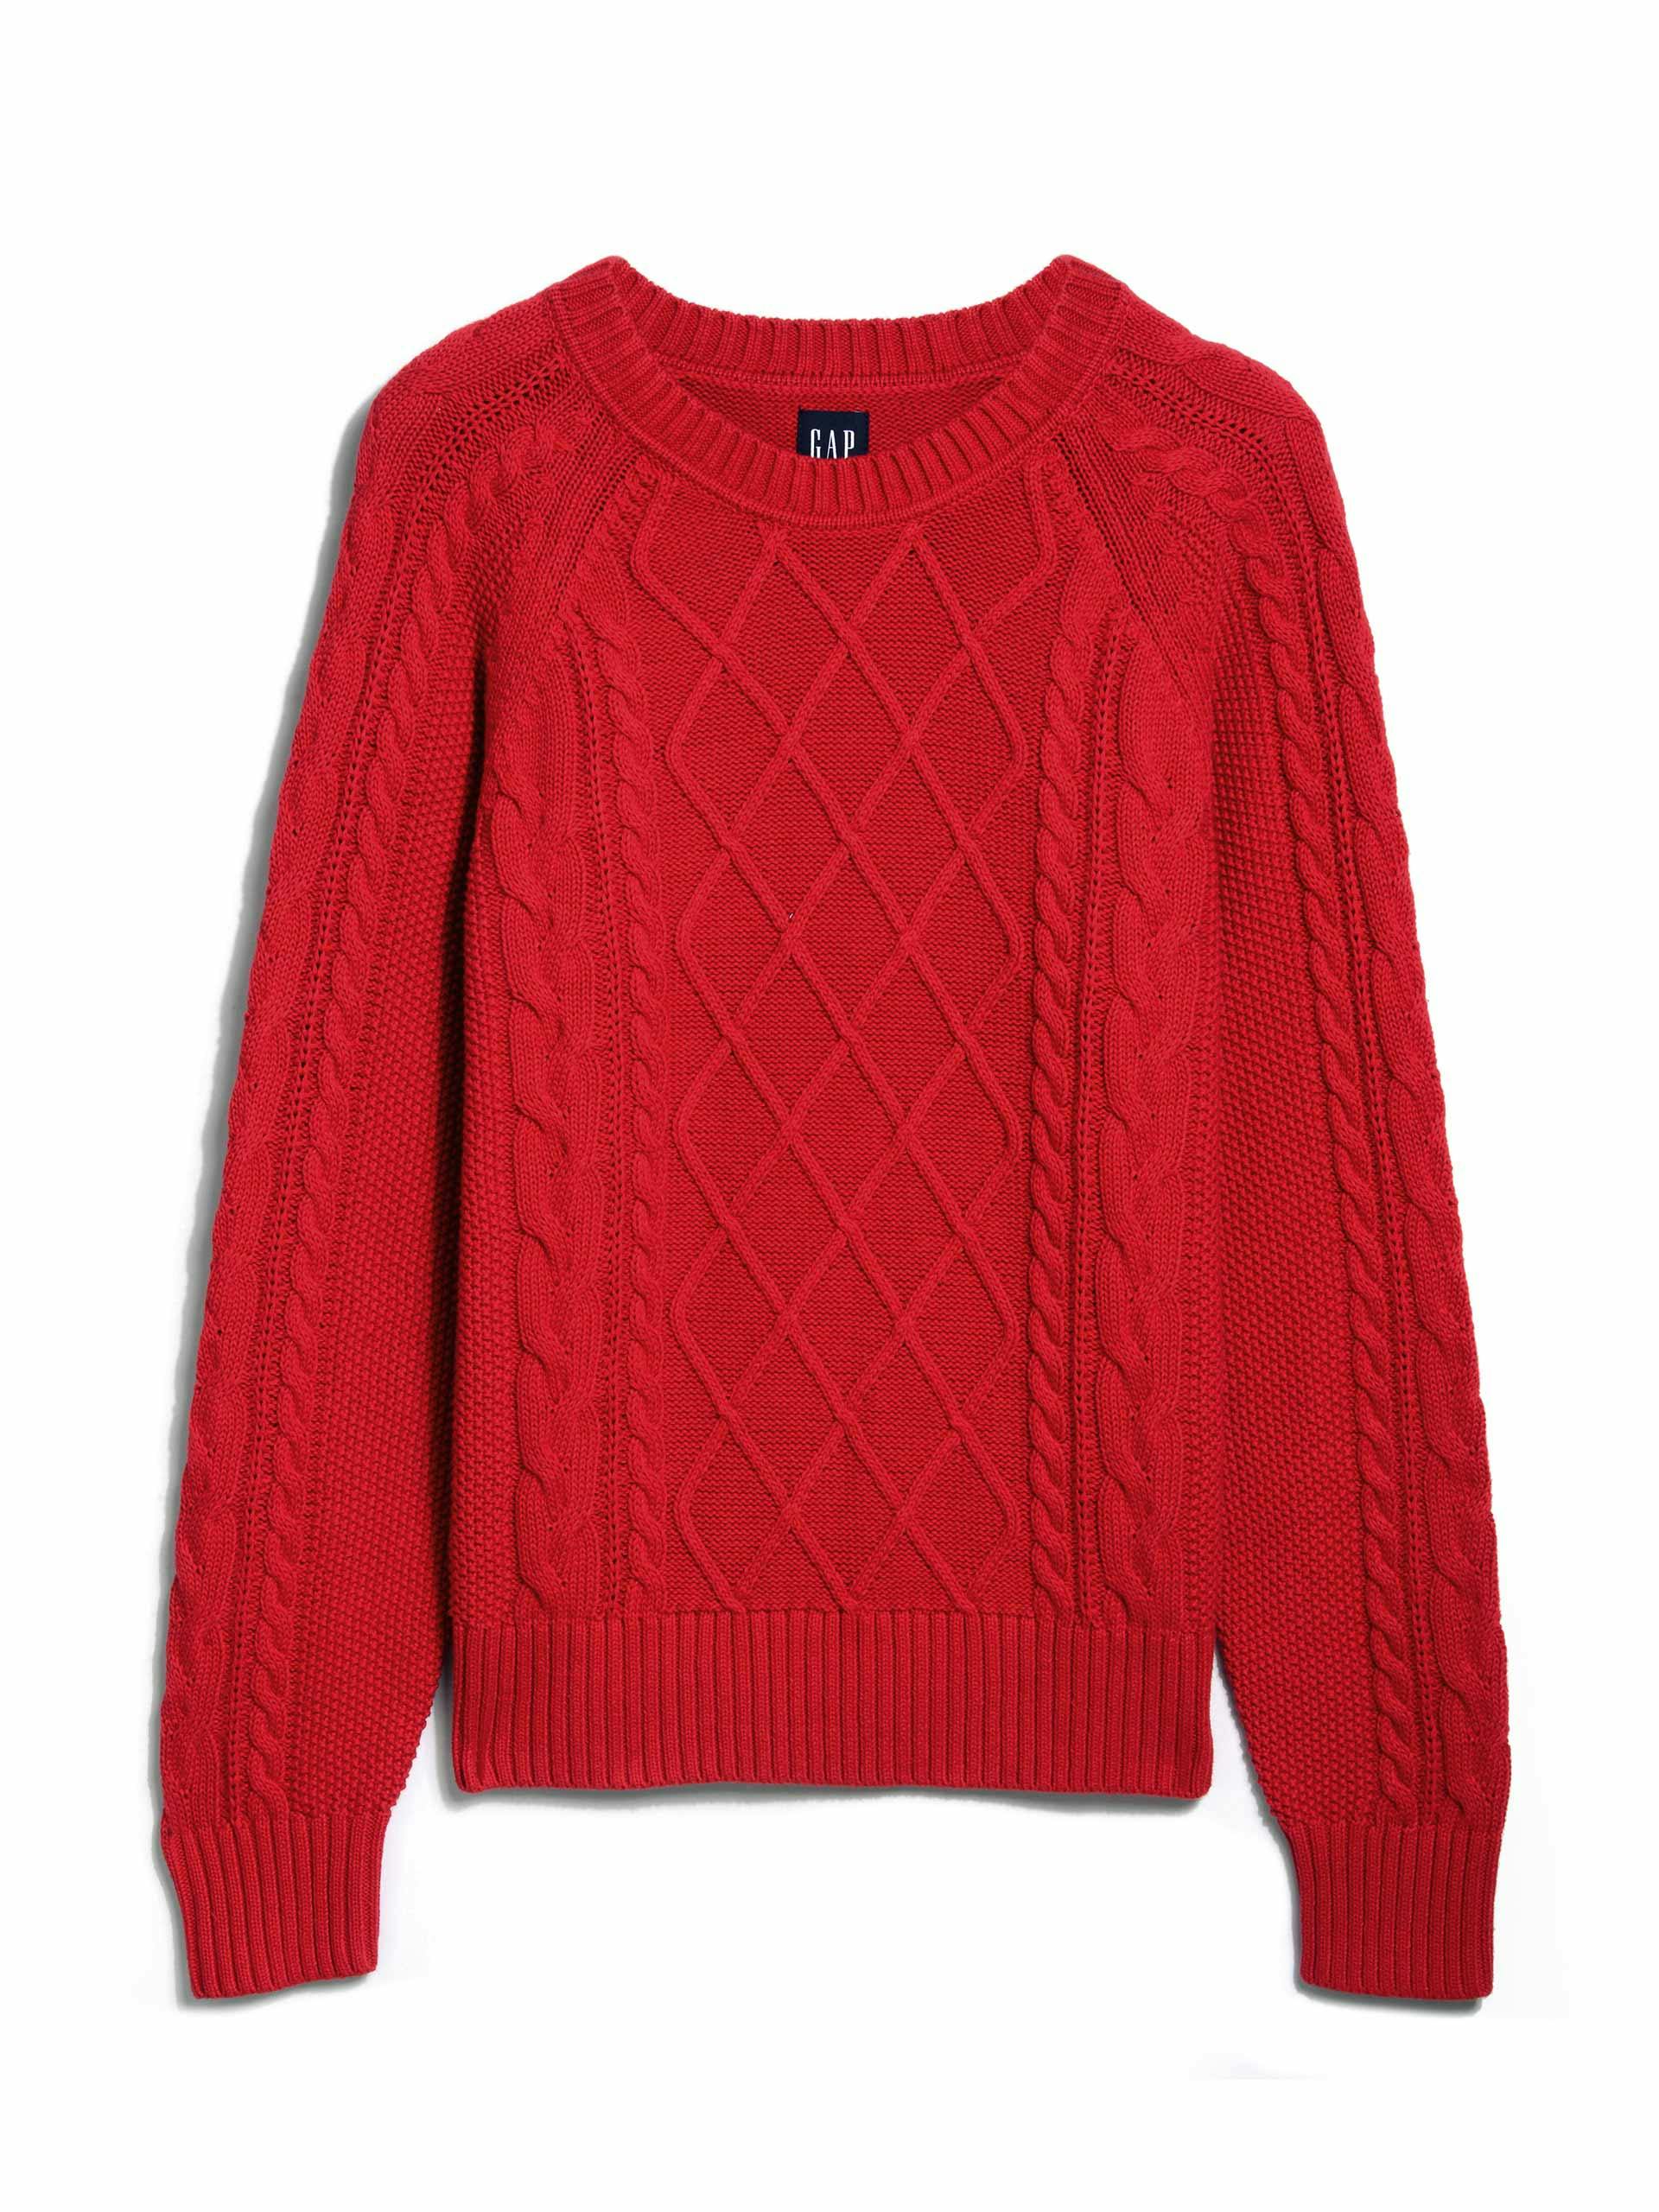 Red knit jumper